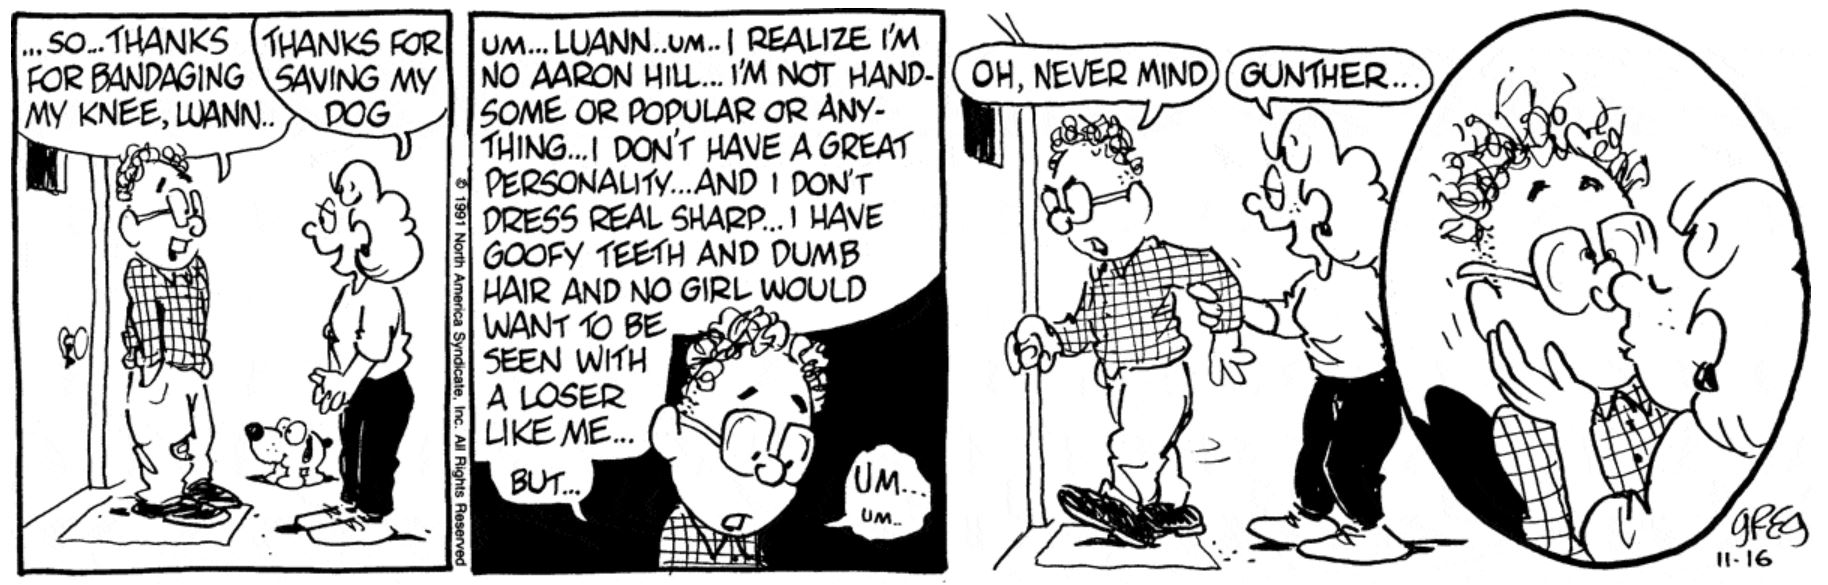 LUANN comic from 1991.11.16